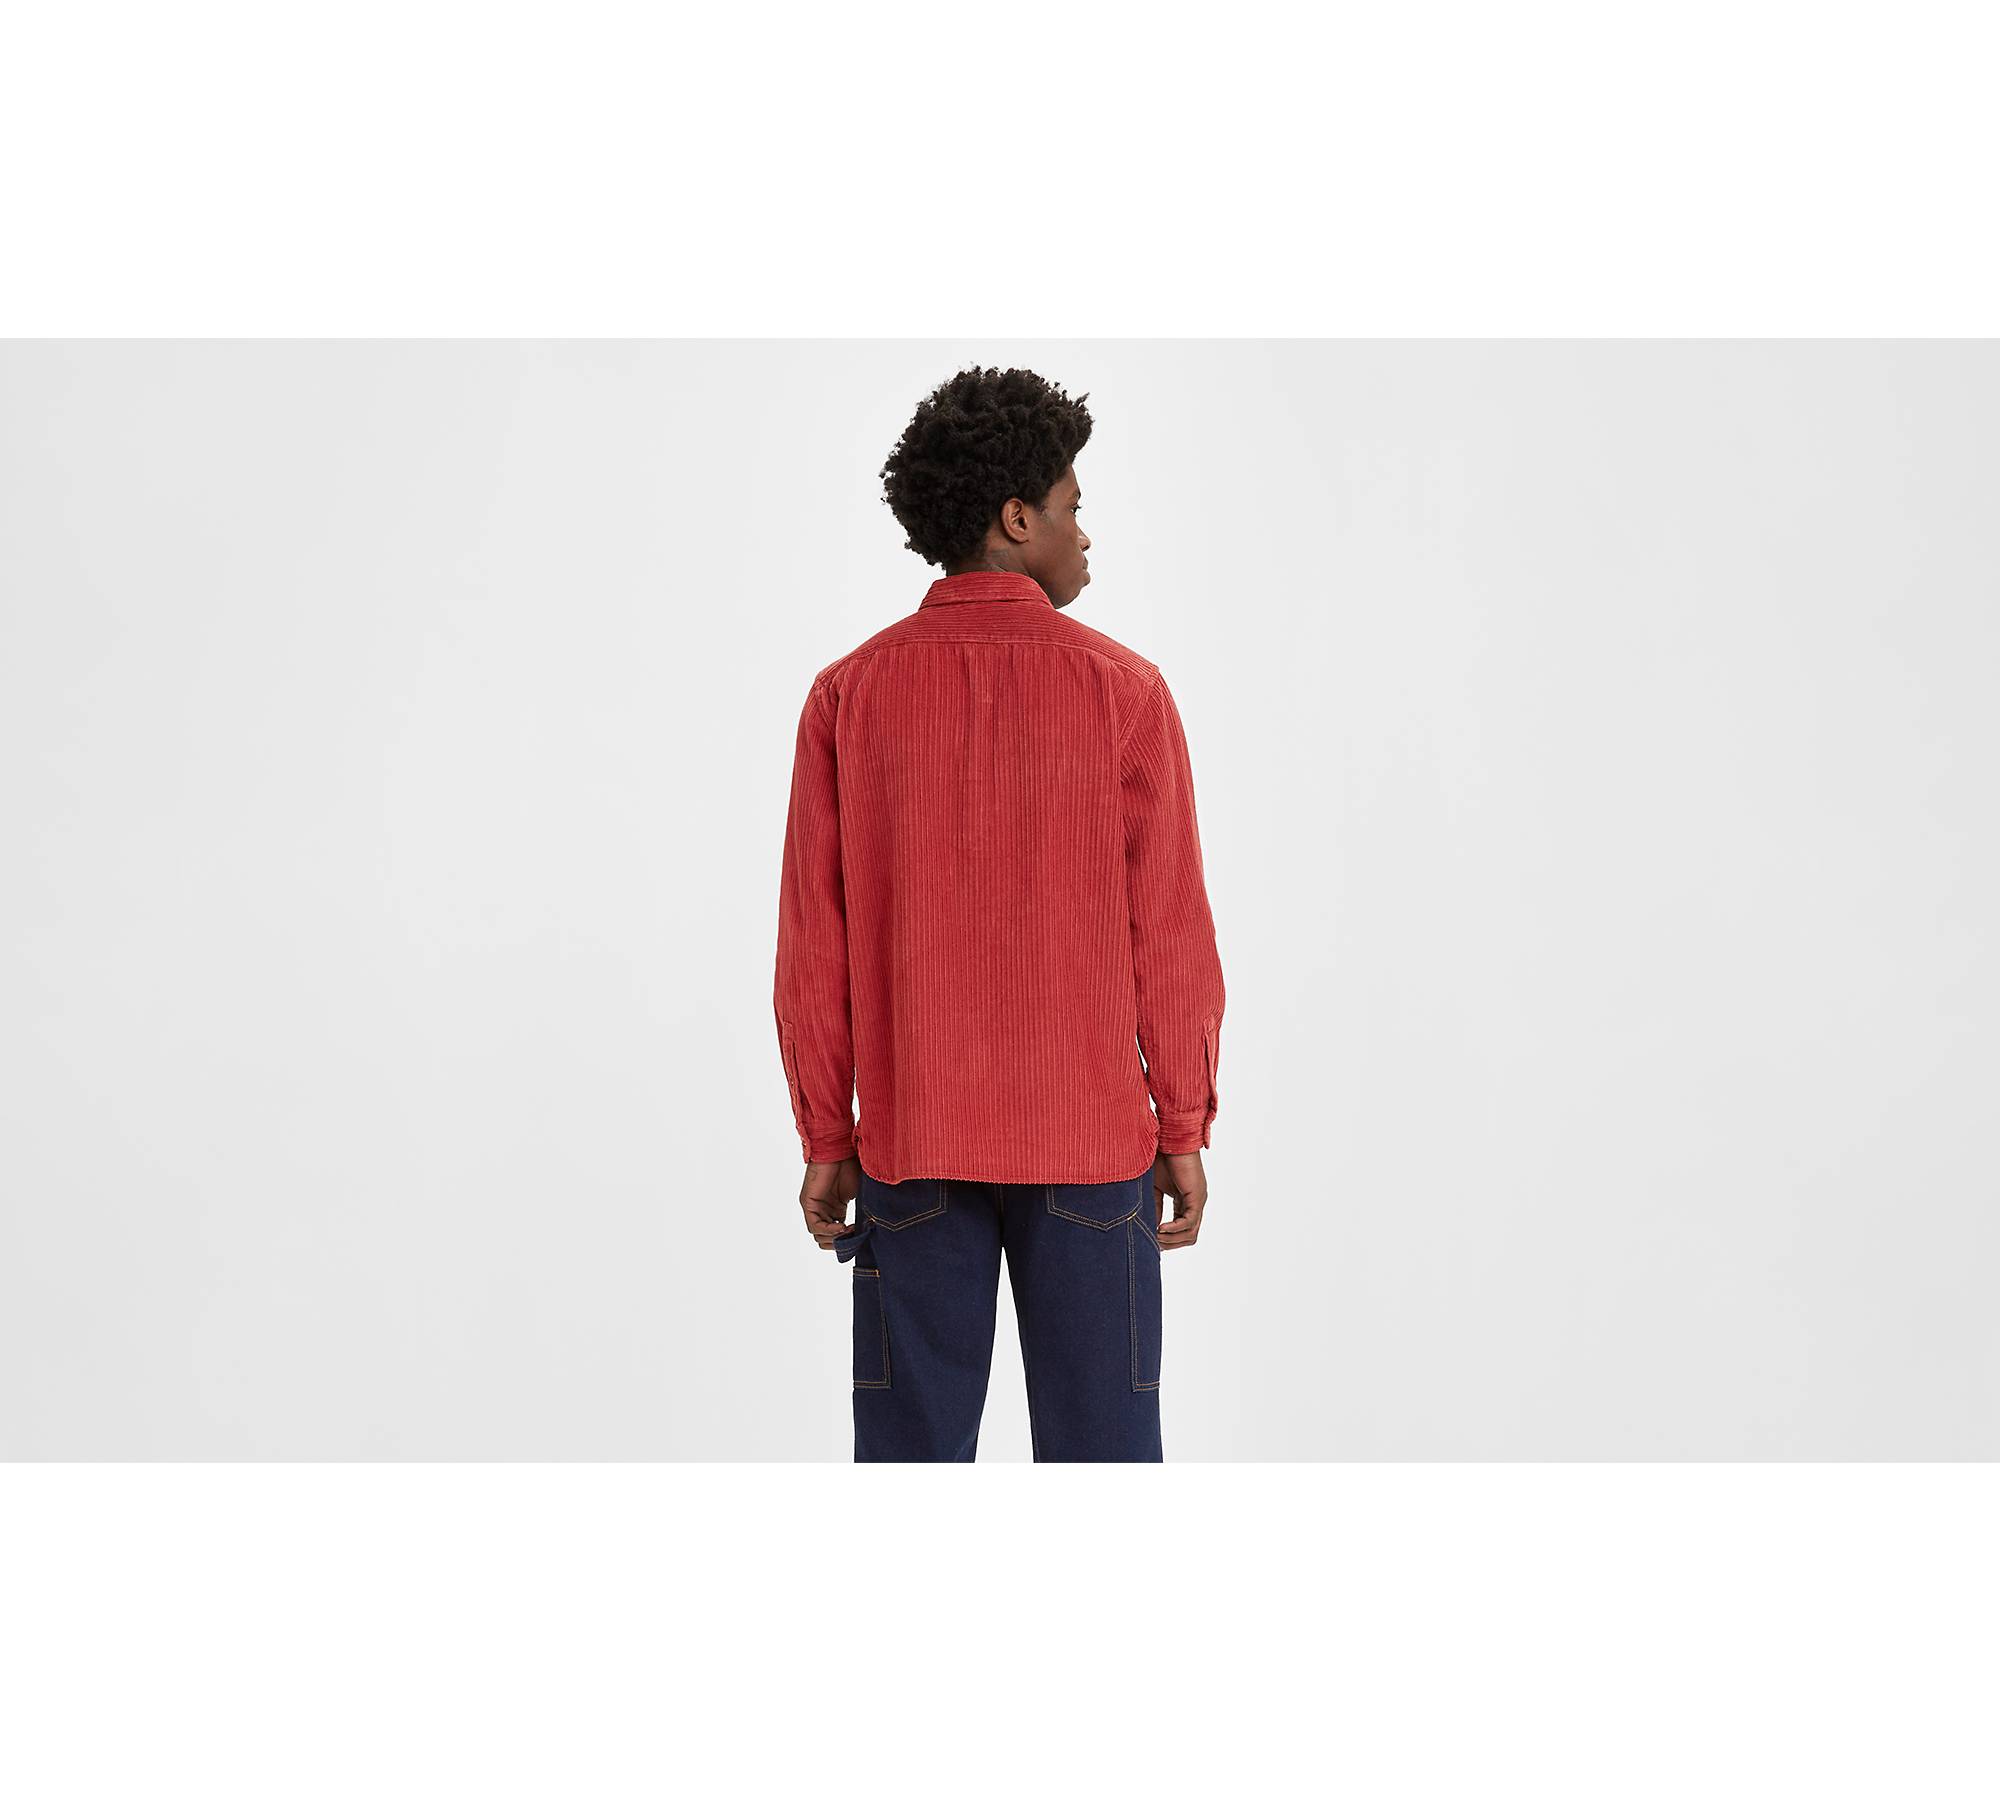 Jackson Worker Corduroy Overshirt - Red | Levi's® US